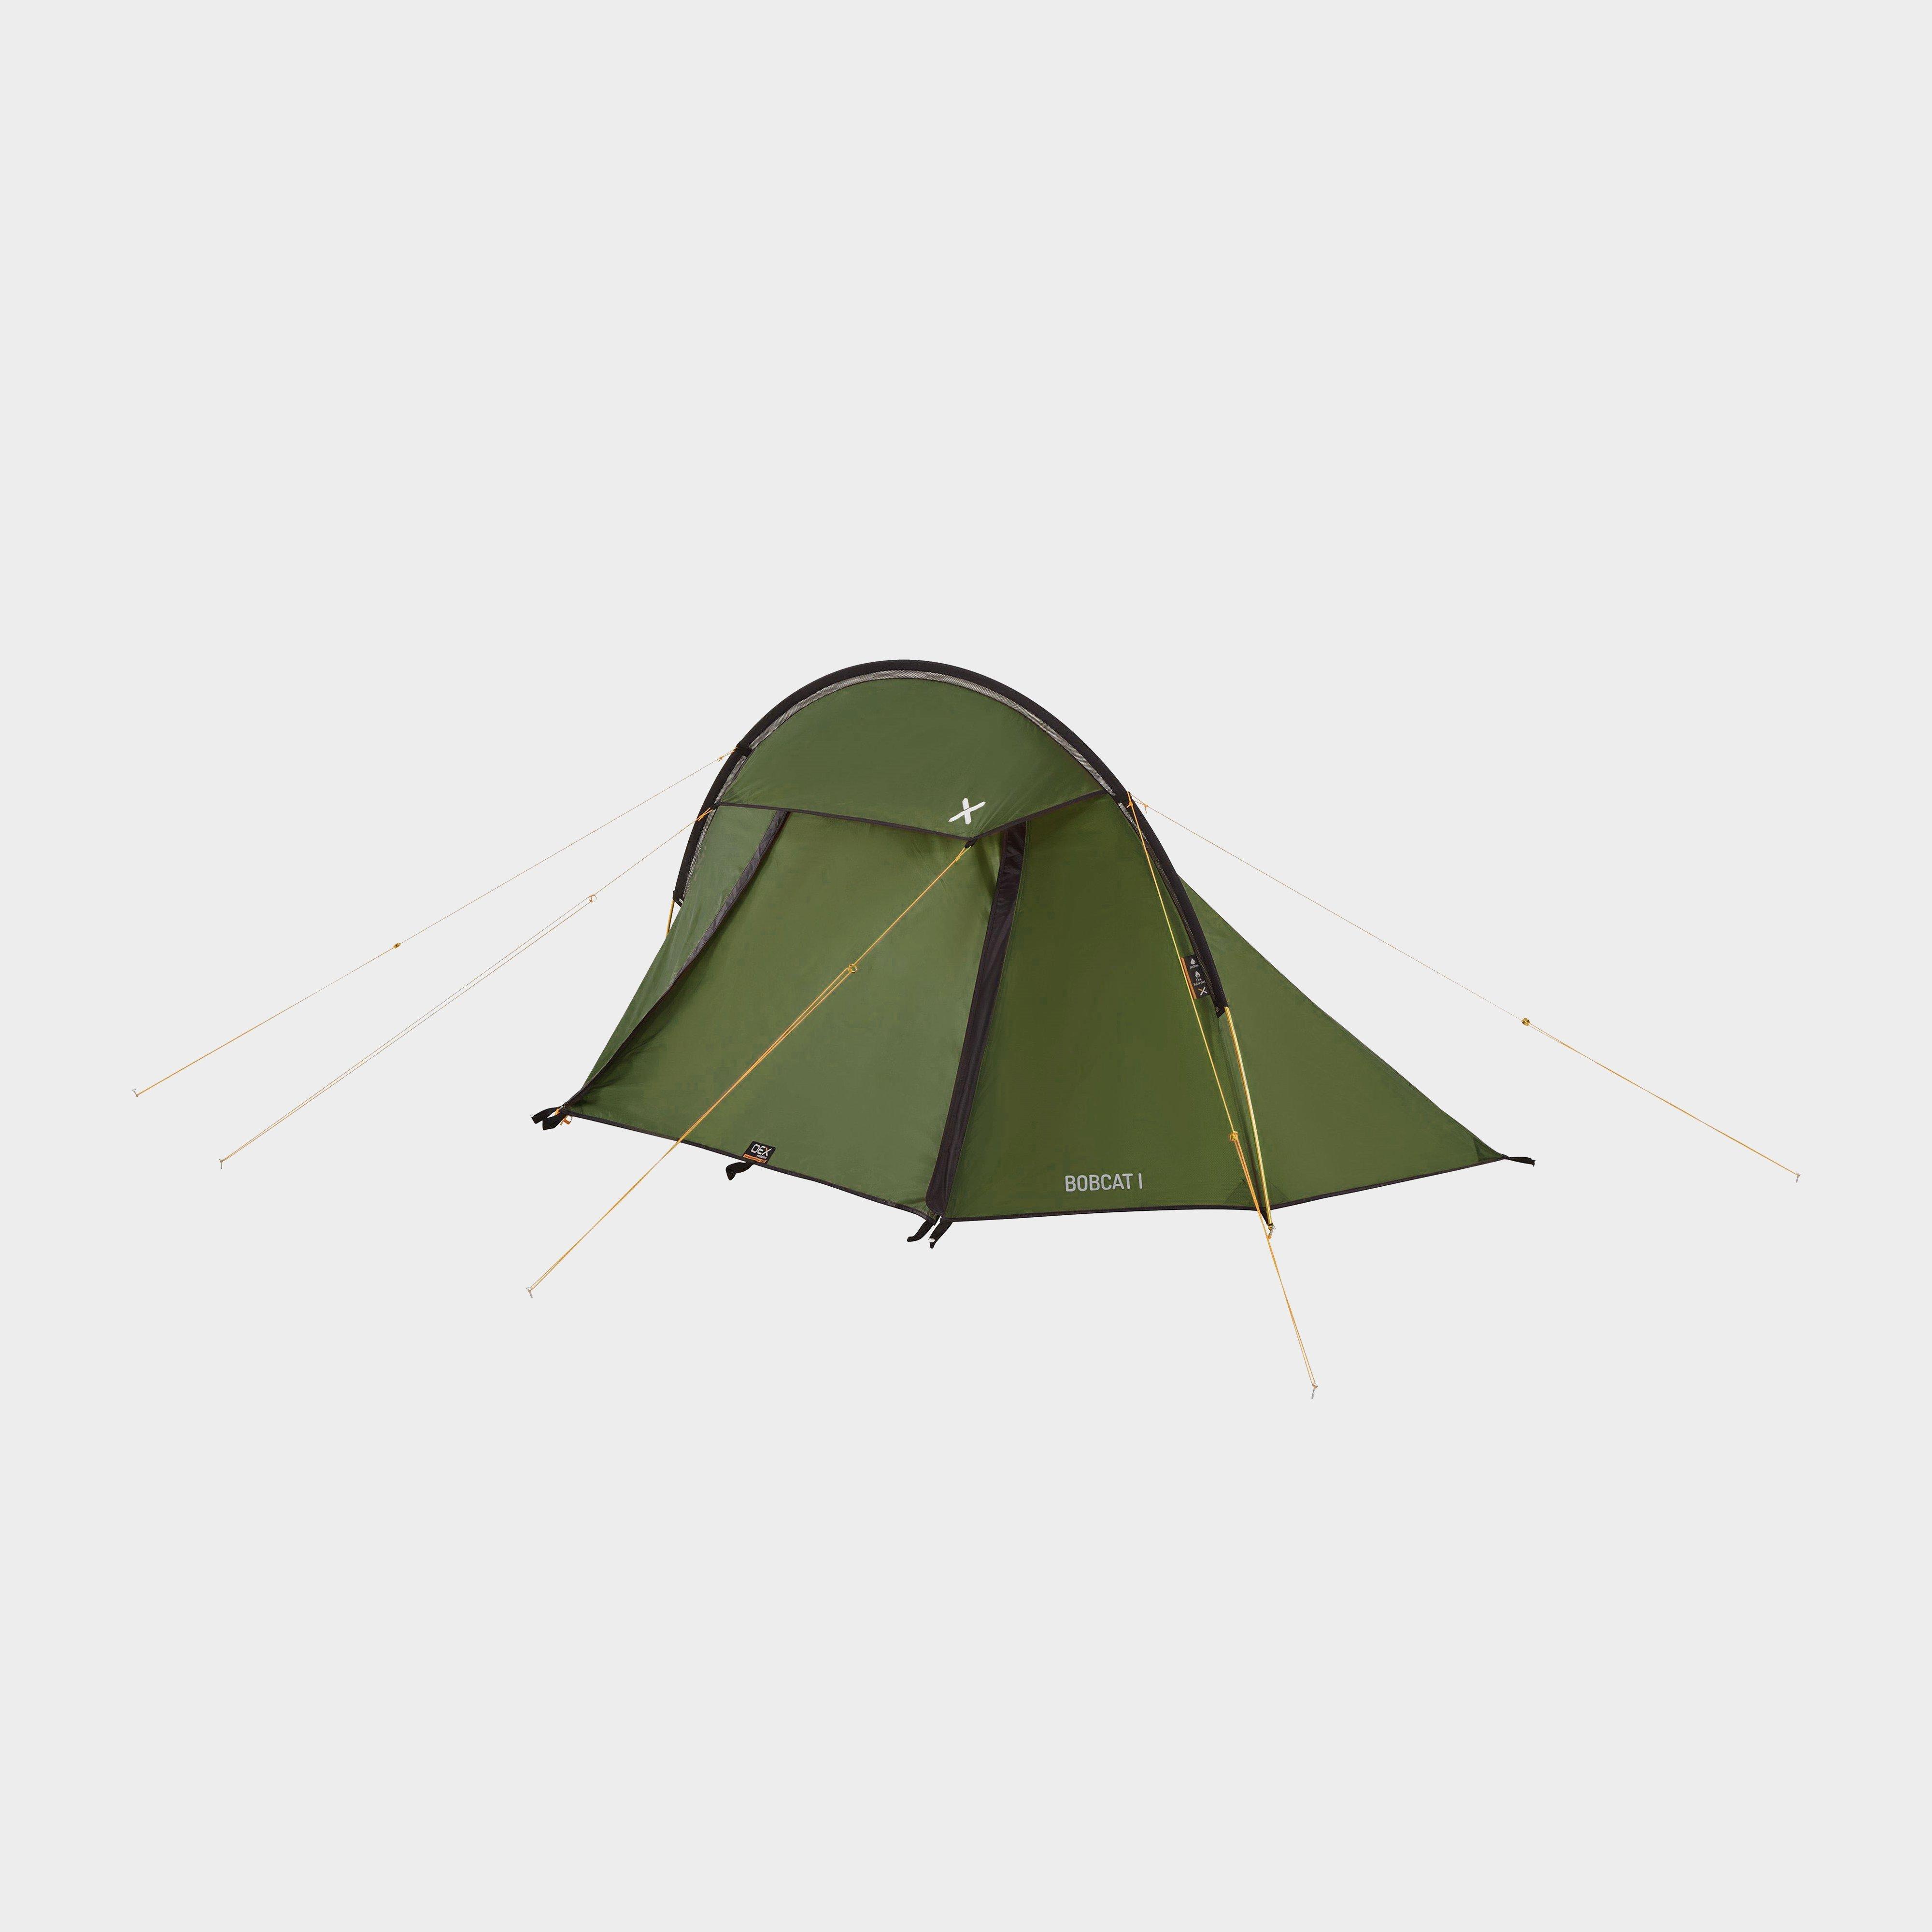  OEX Bobcat 1 Person Tent, Green